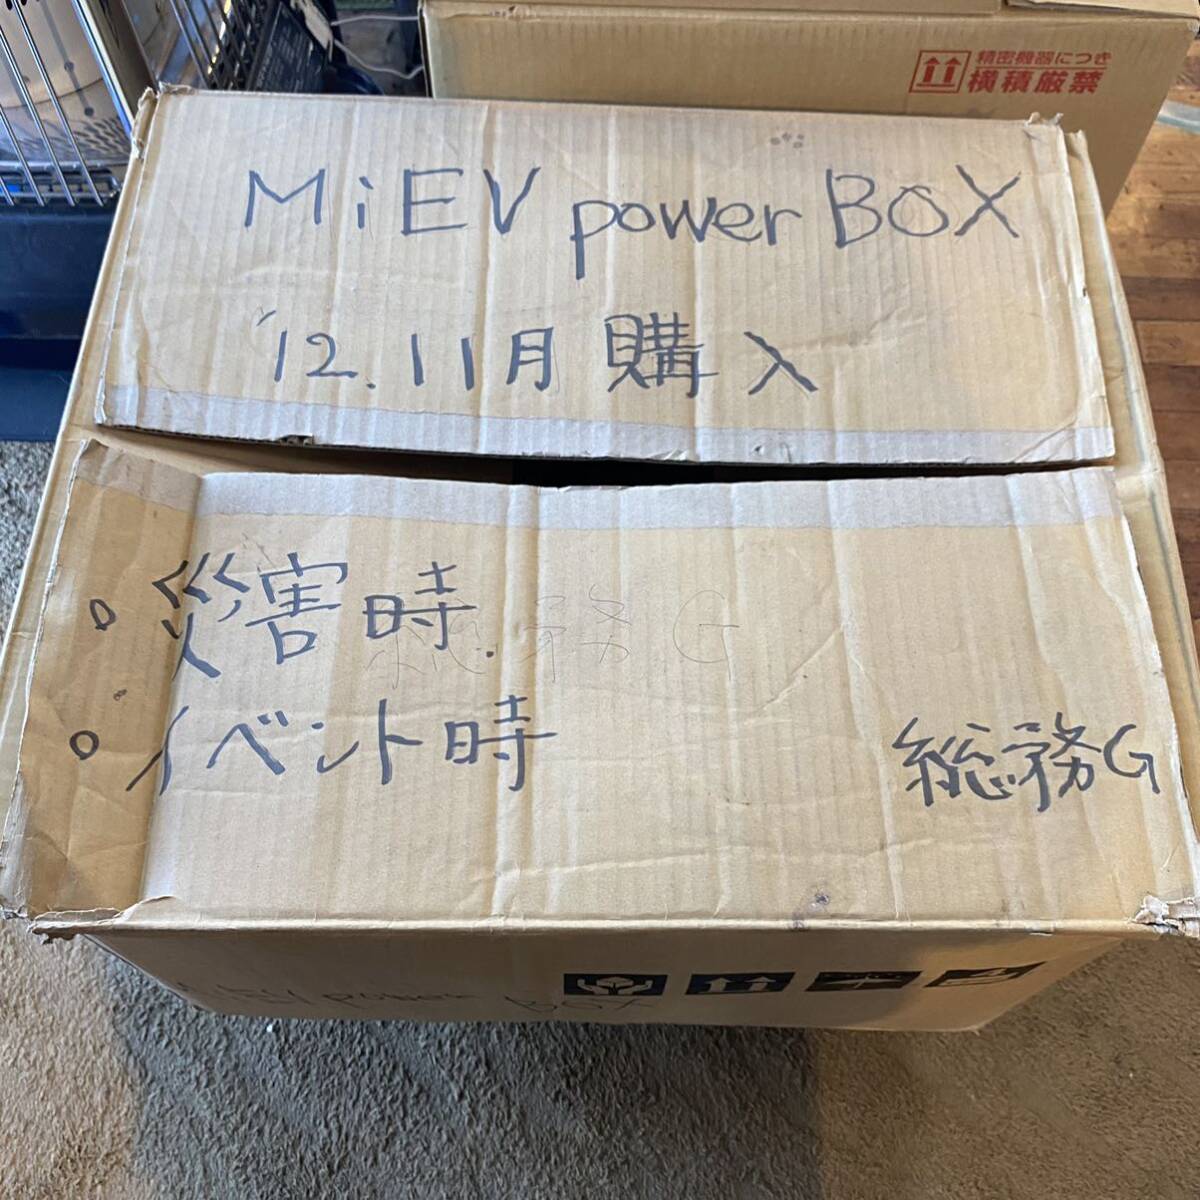  не проверено текущее состояние товар Mitsubishi MITSUBISHI MiEV power BOXmi-b энергия box MZ604775